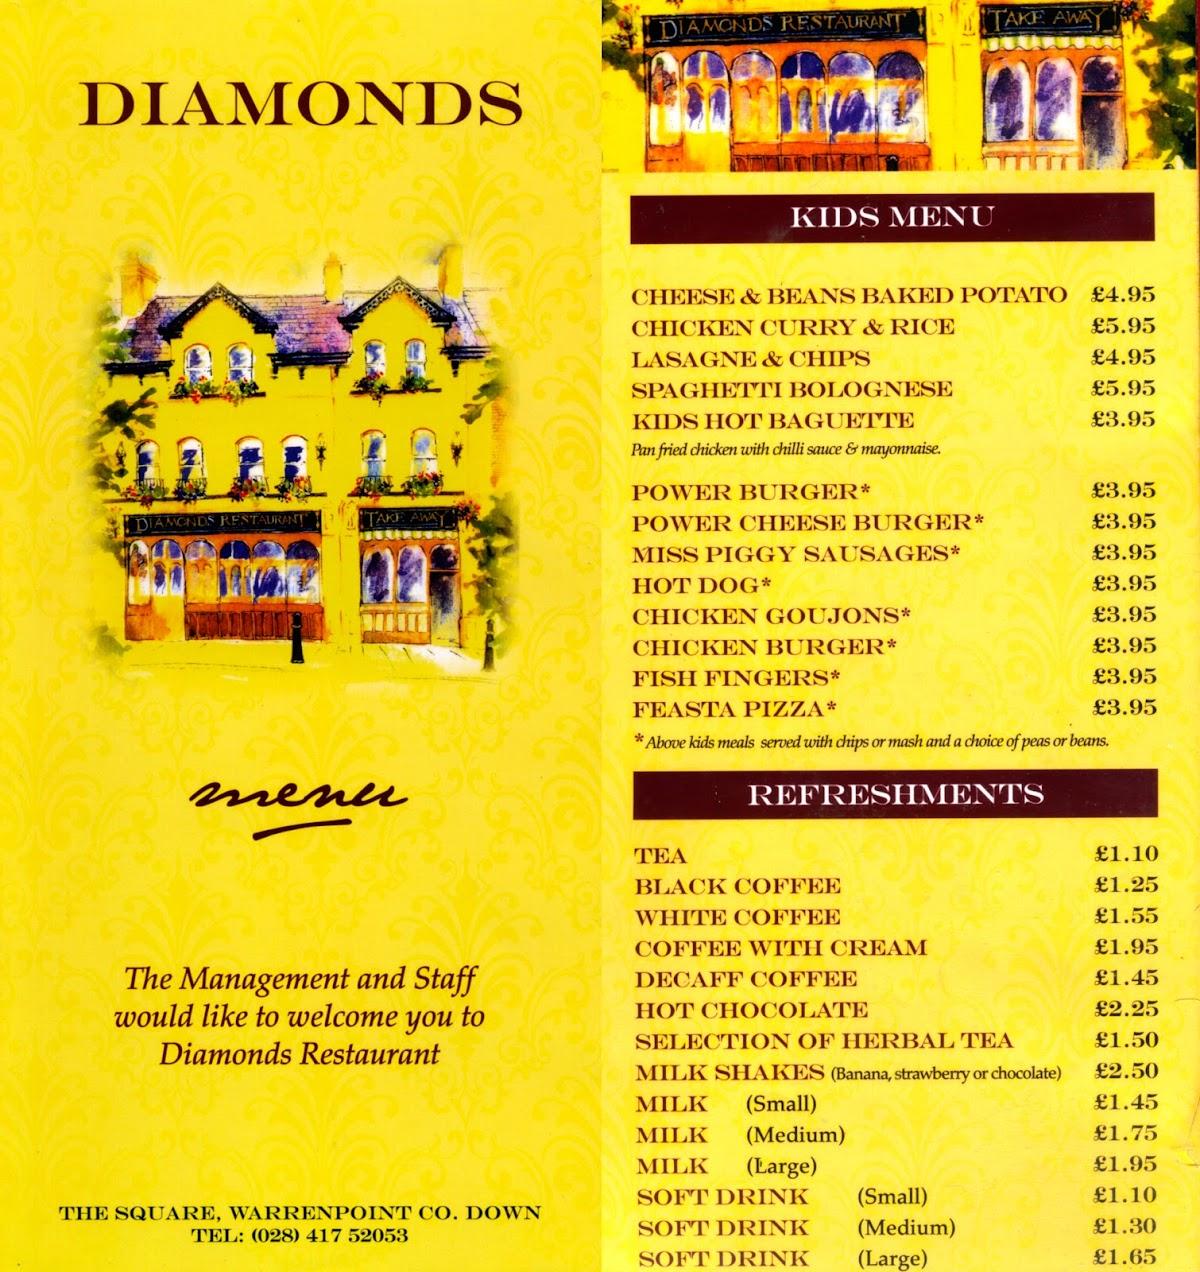 R520 Diamonds Restaurant Advertisement 2022 10 